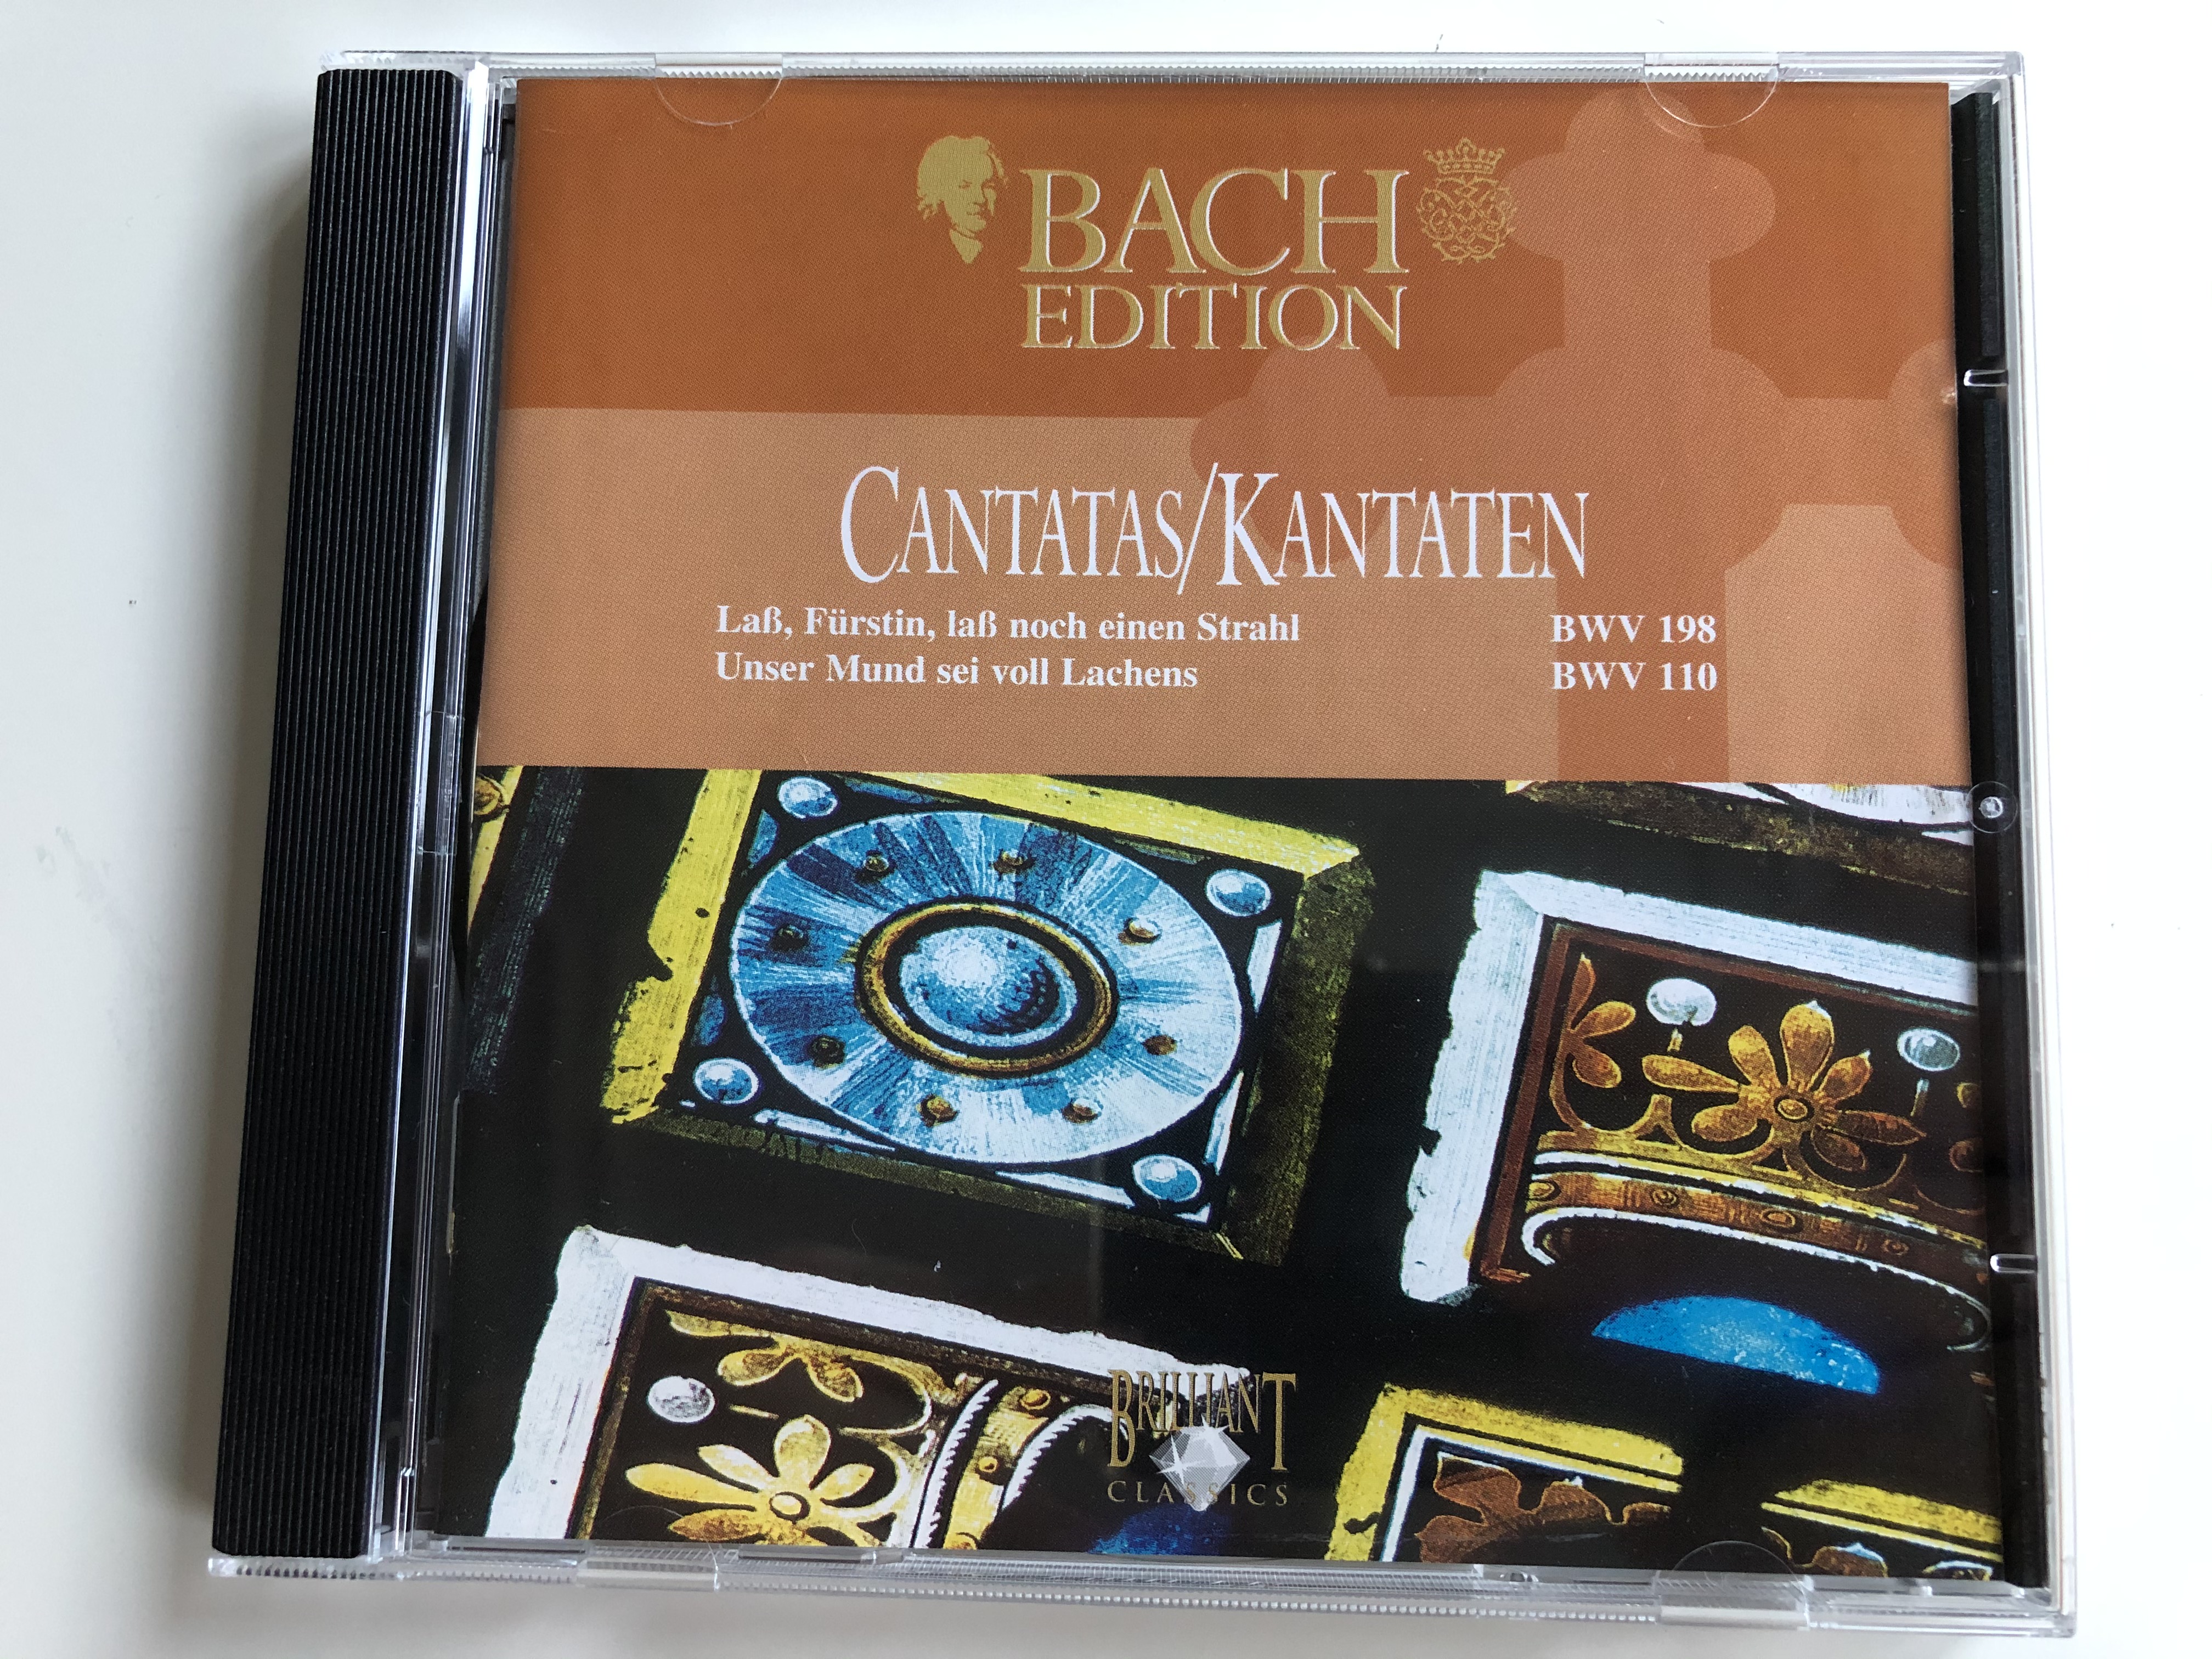 bach-edition-cantatas-kantaten-la-f-rstin-la-noch-einen-strahl-bwv-198-unser-mund-sei-voll-lachens-bwv-110-brilliant-classics-audio-cd-993731-1-.jpg